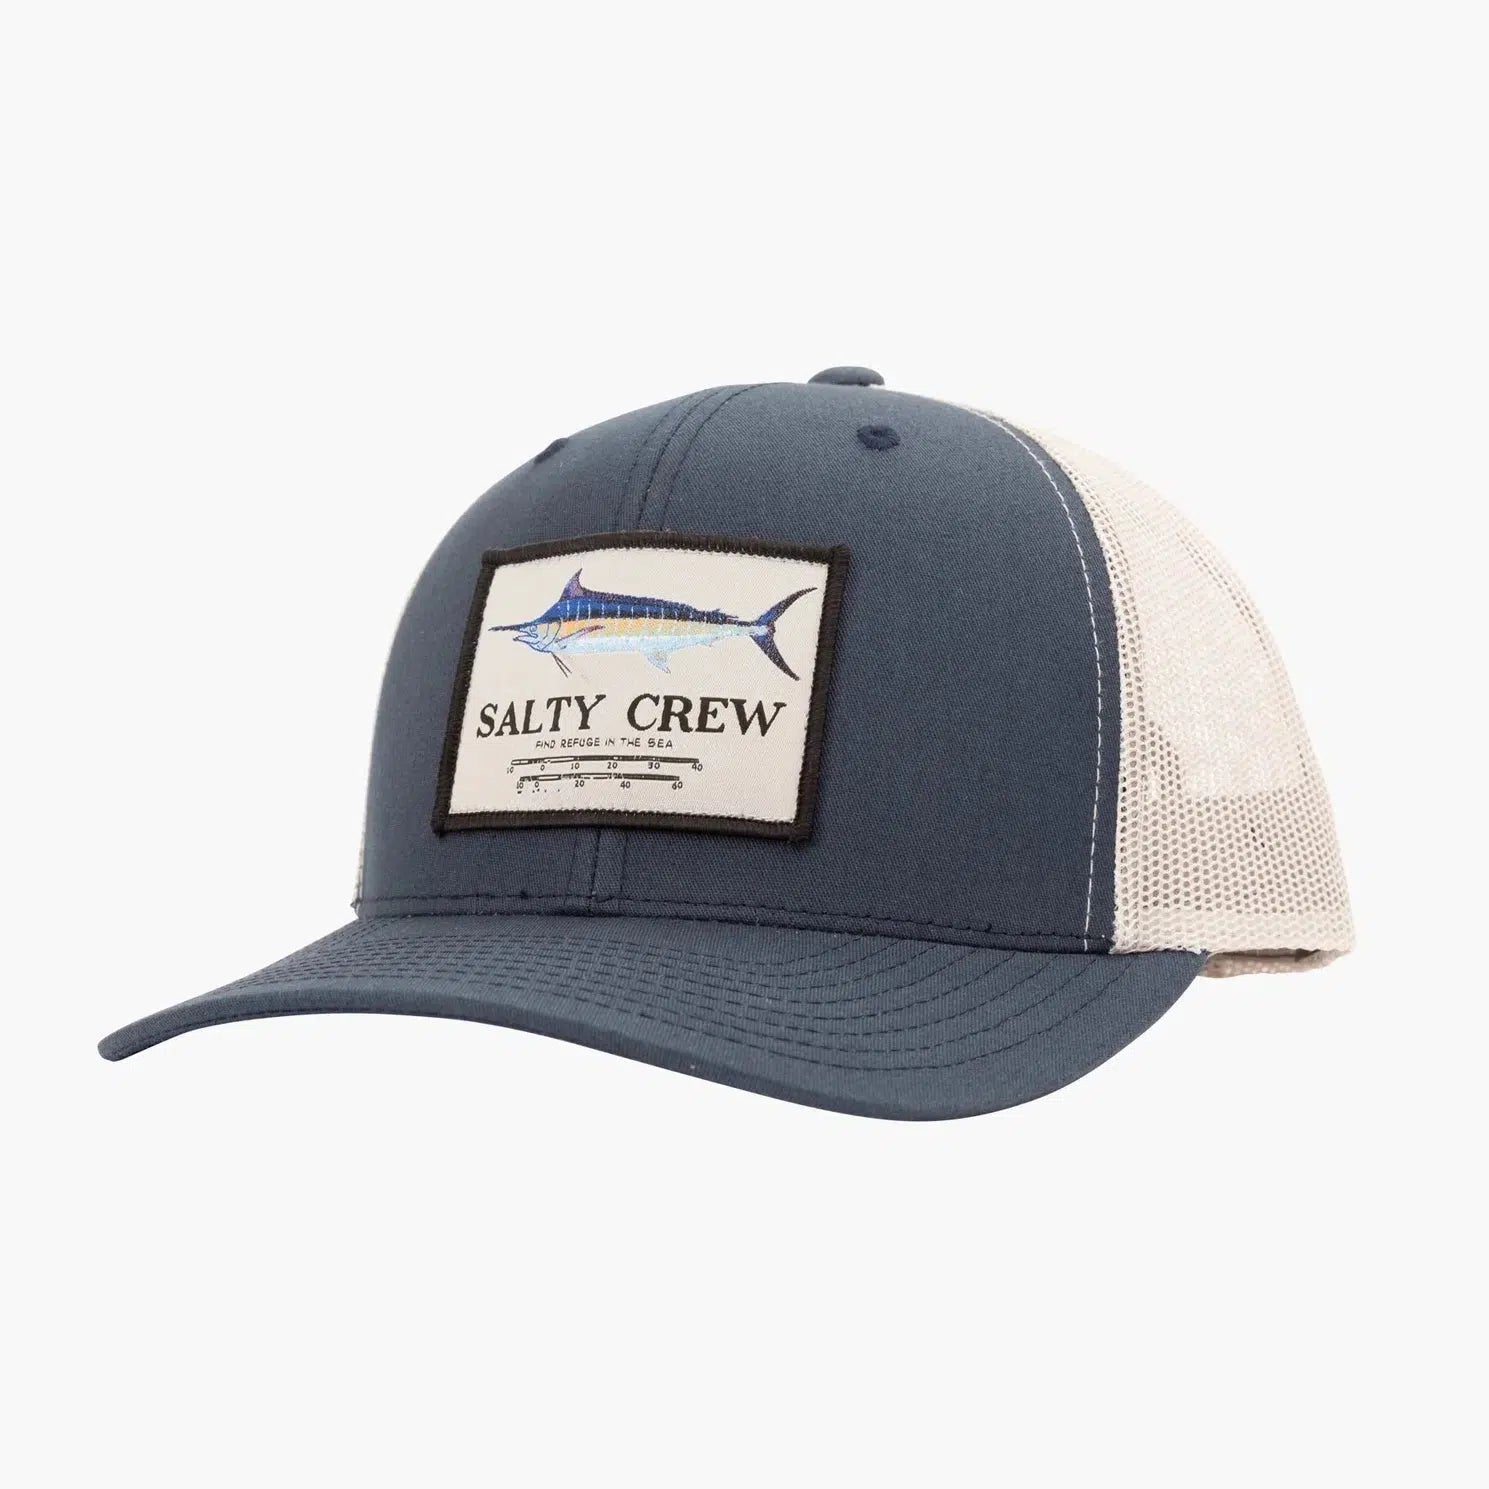 Salty Crew Marlin Mount Retro Trucker Hat-Hats & Headwear-Salty Crew-Navy/Silver-Fishing Station